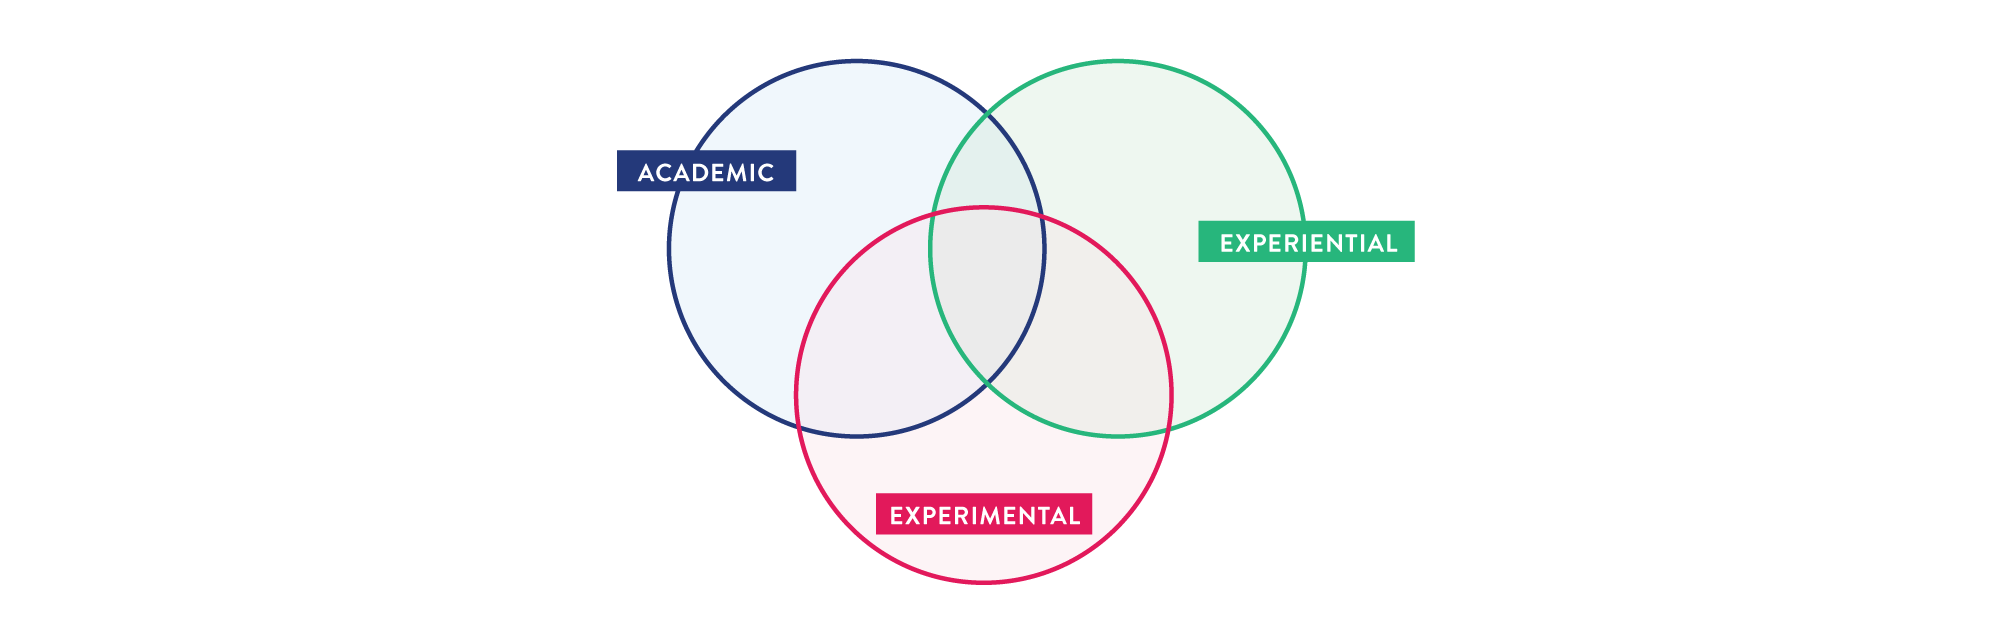 Academic, Experiential, Experimental